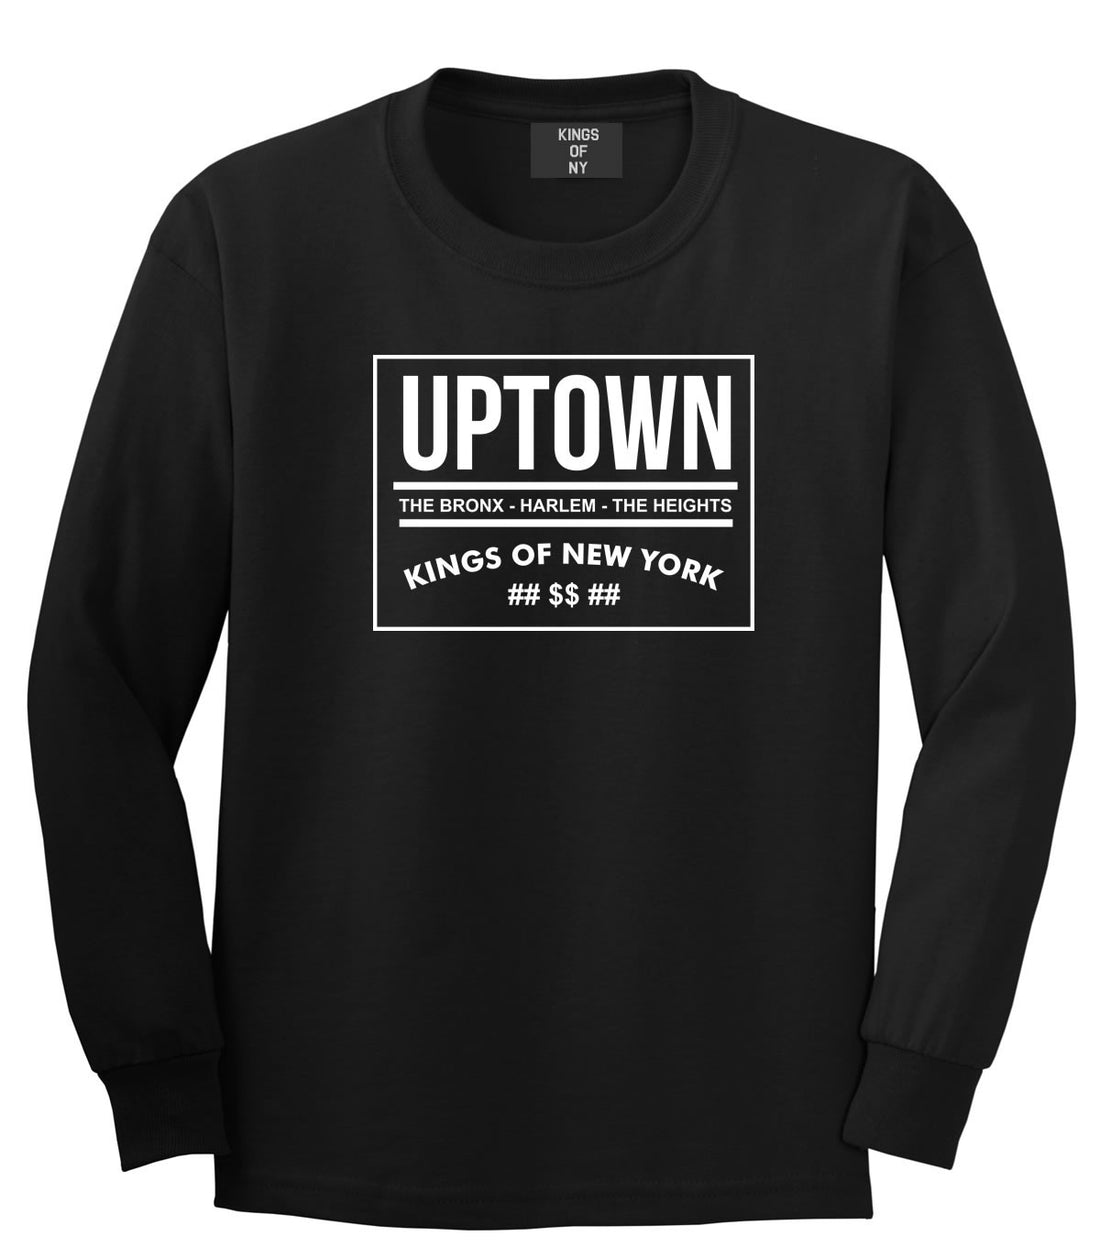 Kings Of NY Uptown Bronx Harlem Washington Heights NYC Long Sleeve T-Shirt in Black